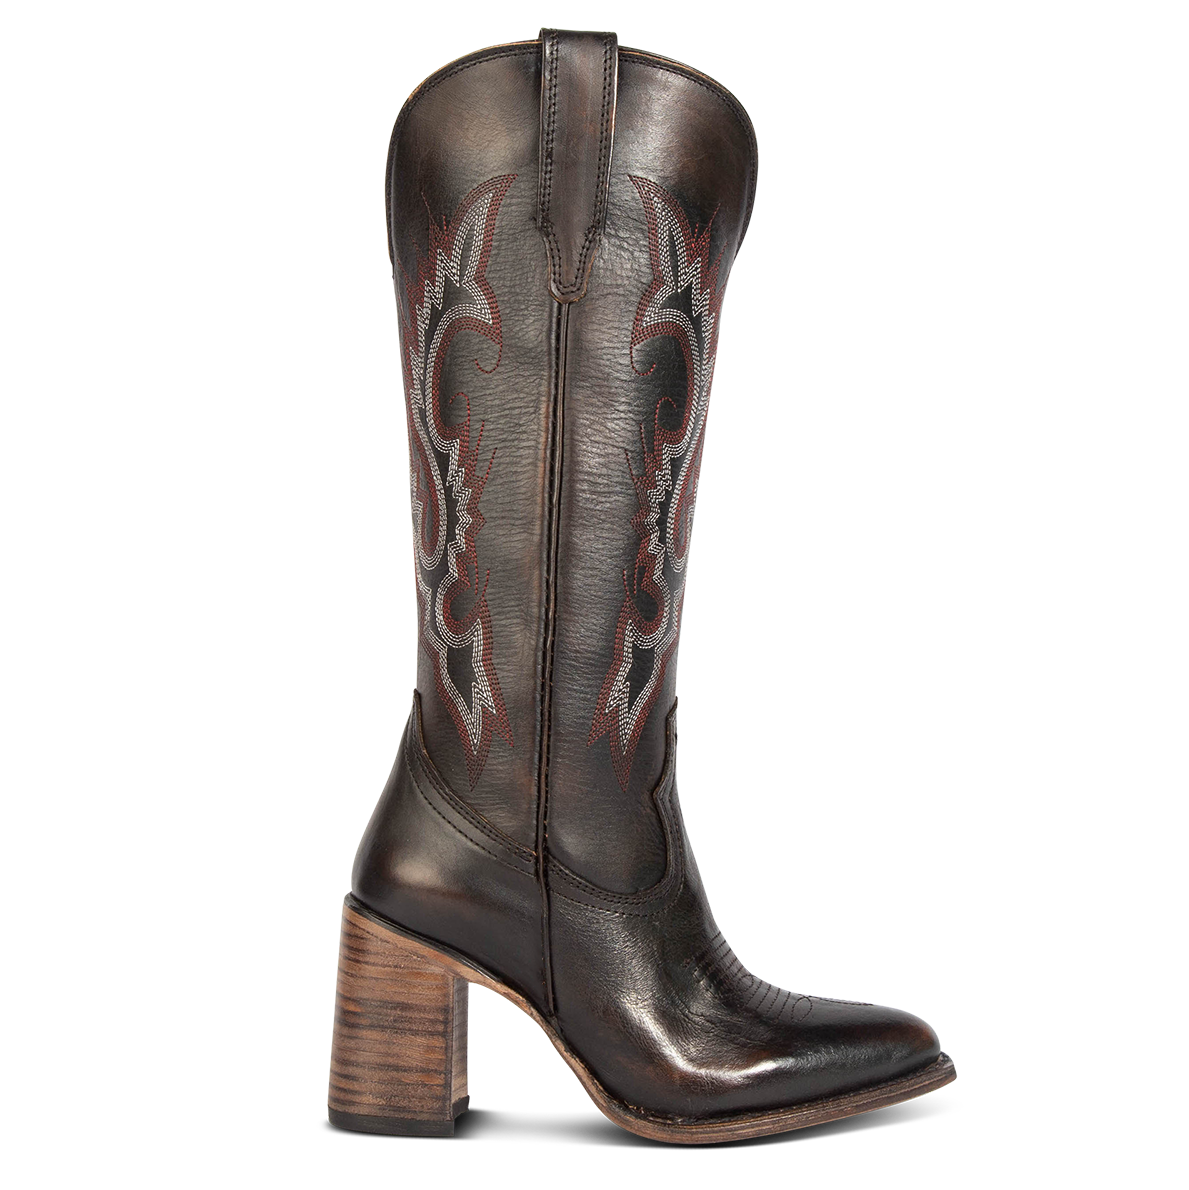 FREEBIRD women's Jackson black leather high heel western boot with stitch detailing